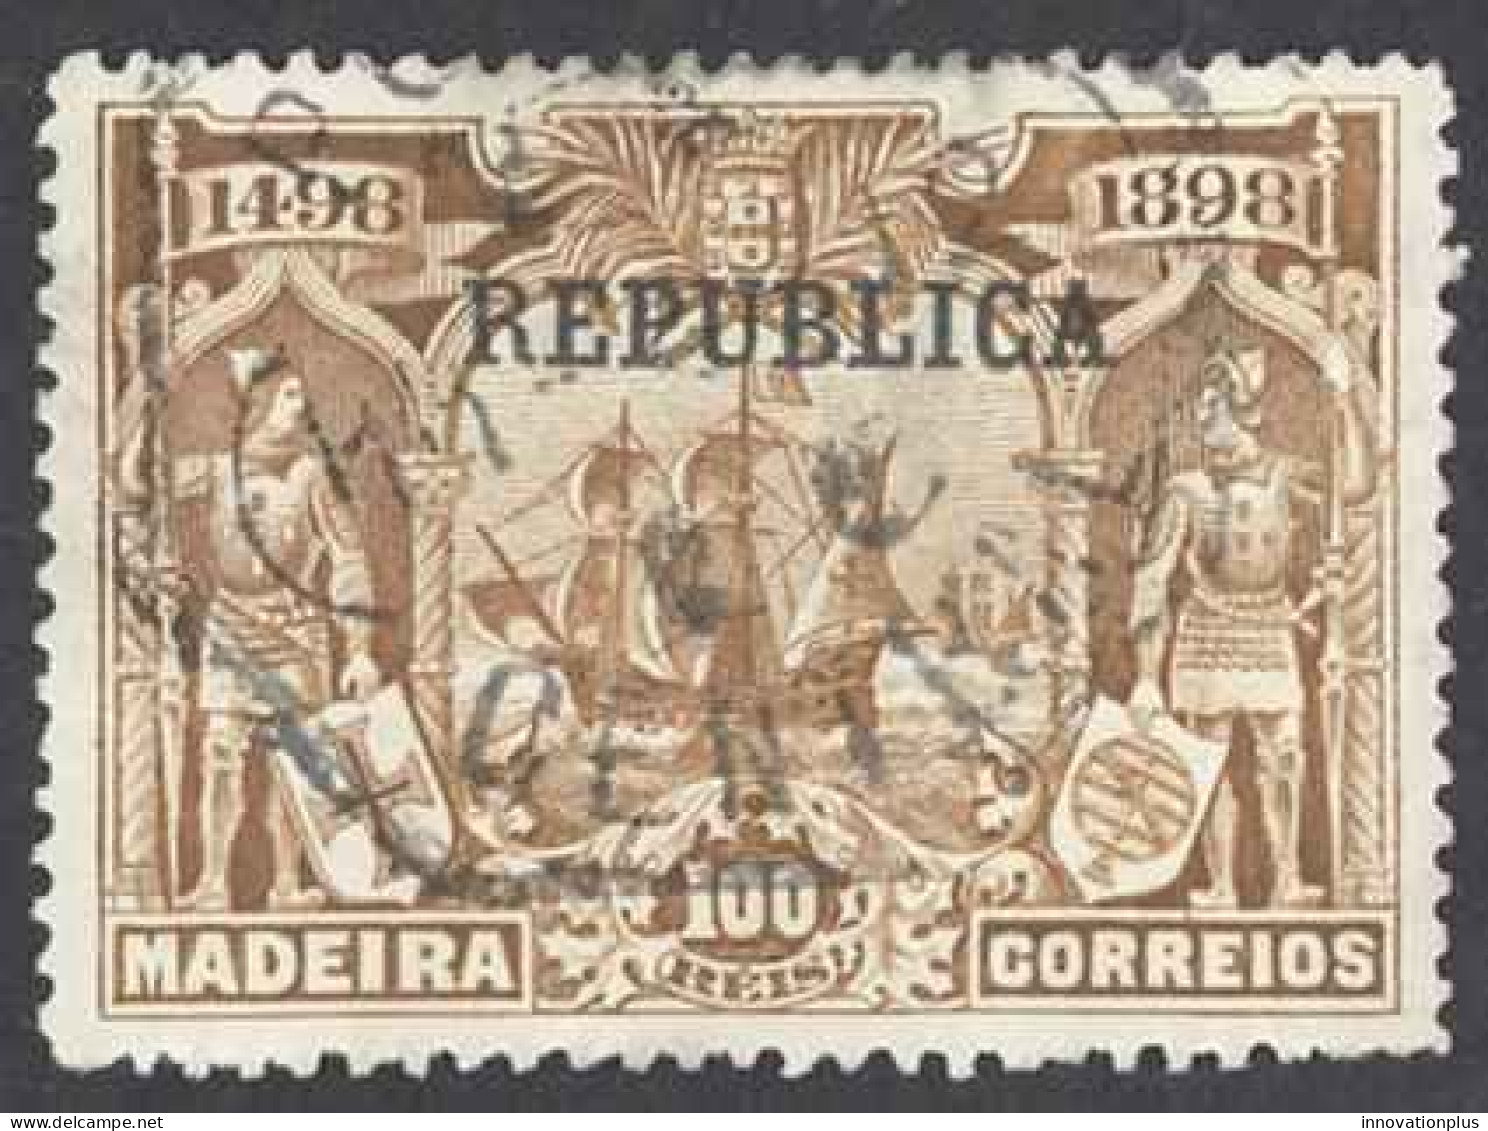 Portugal Sc# 191 Used (a) 1911 100r Overprint Vasco De Gama Issue - Gebruikt